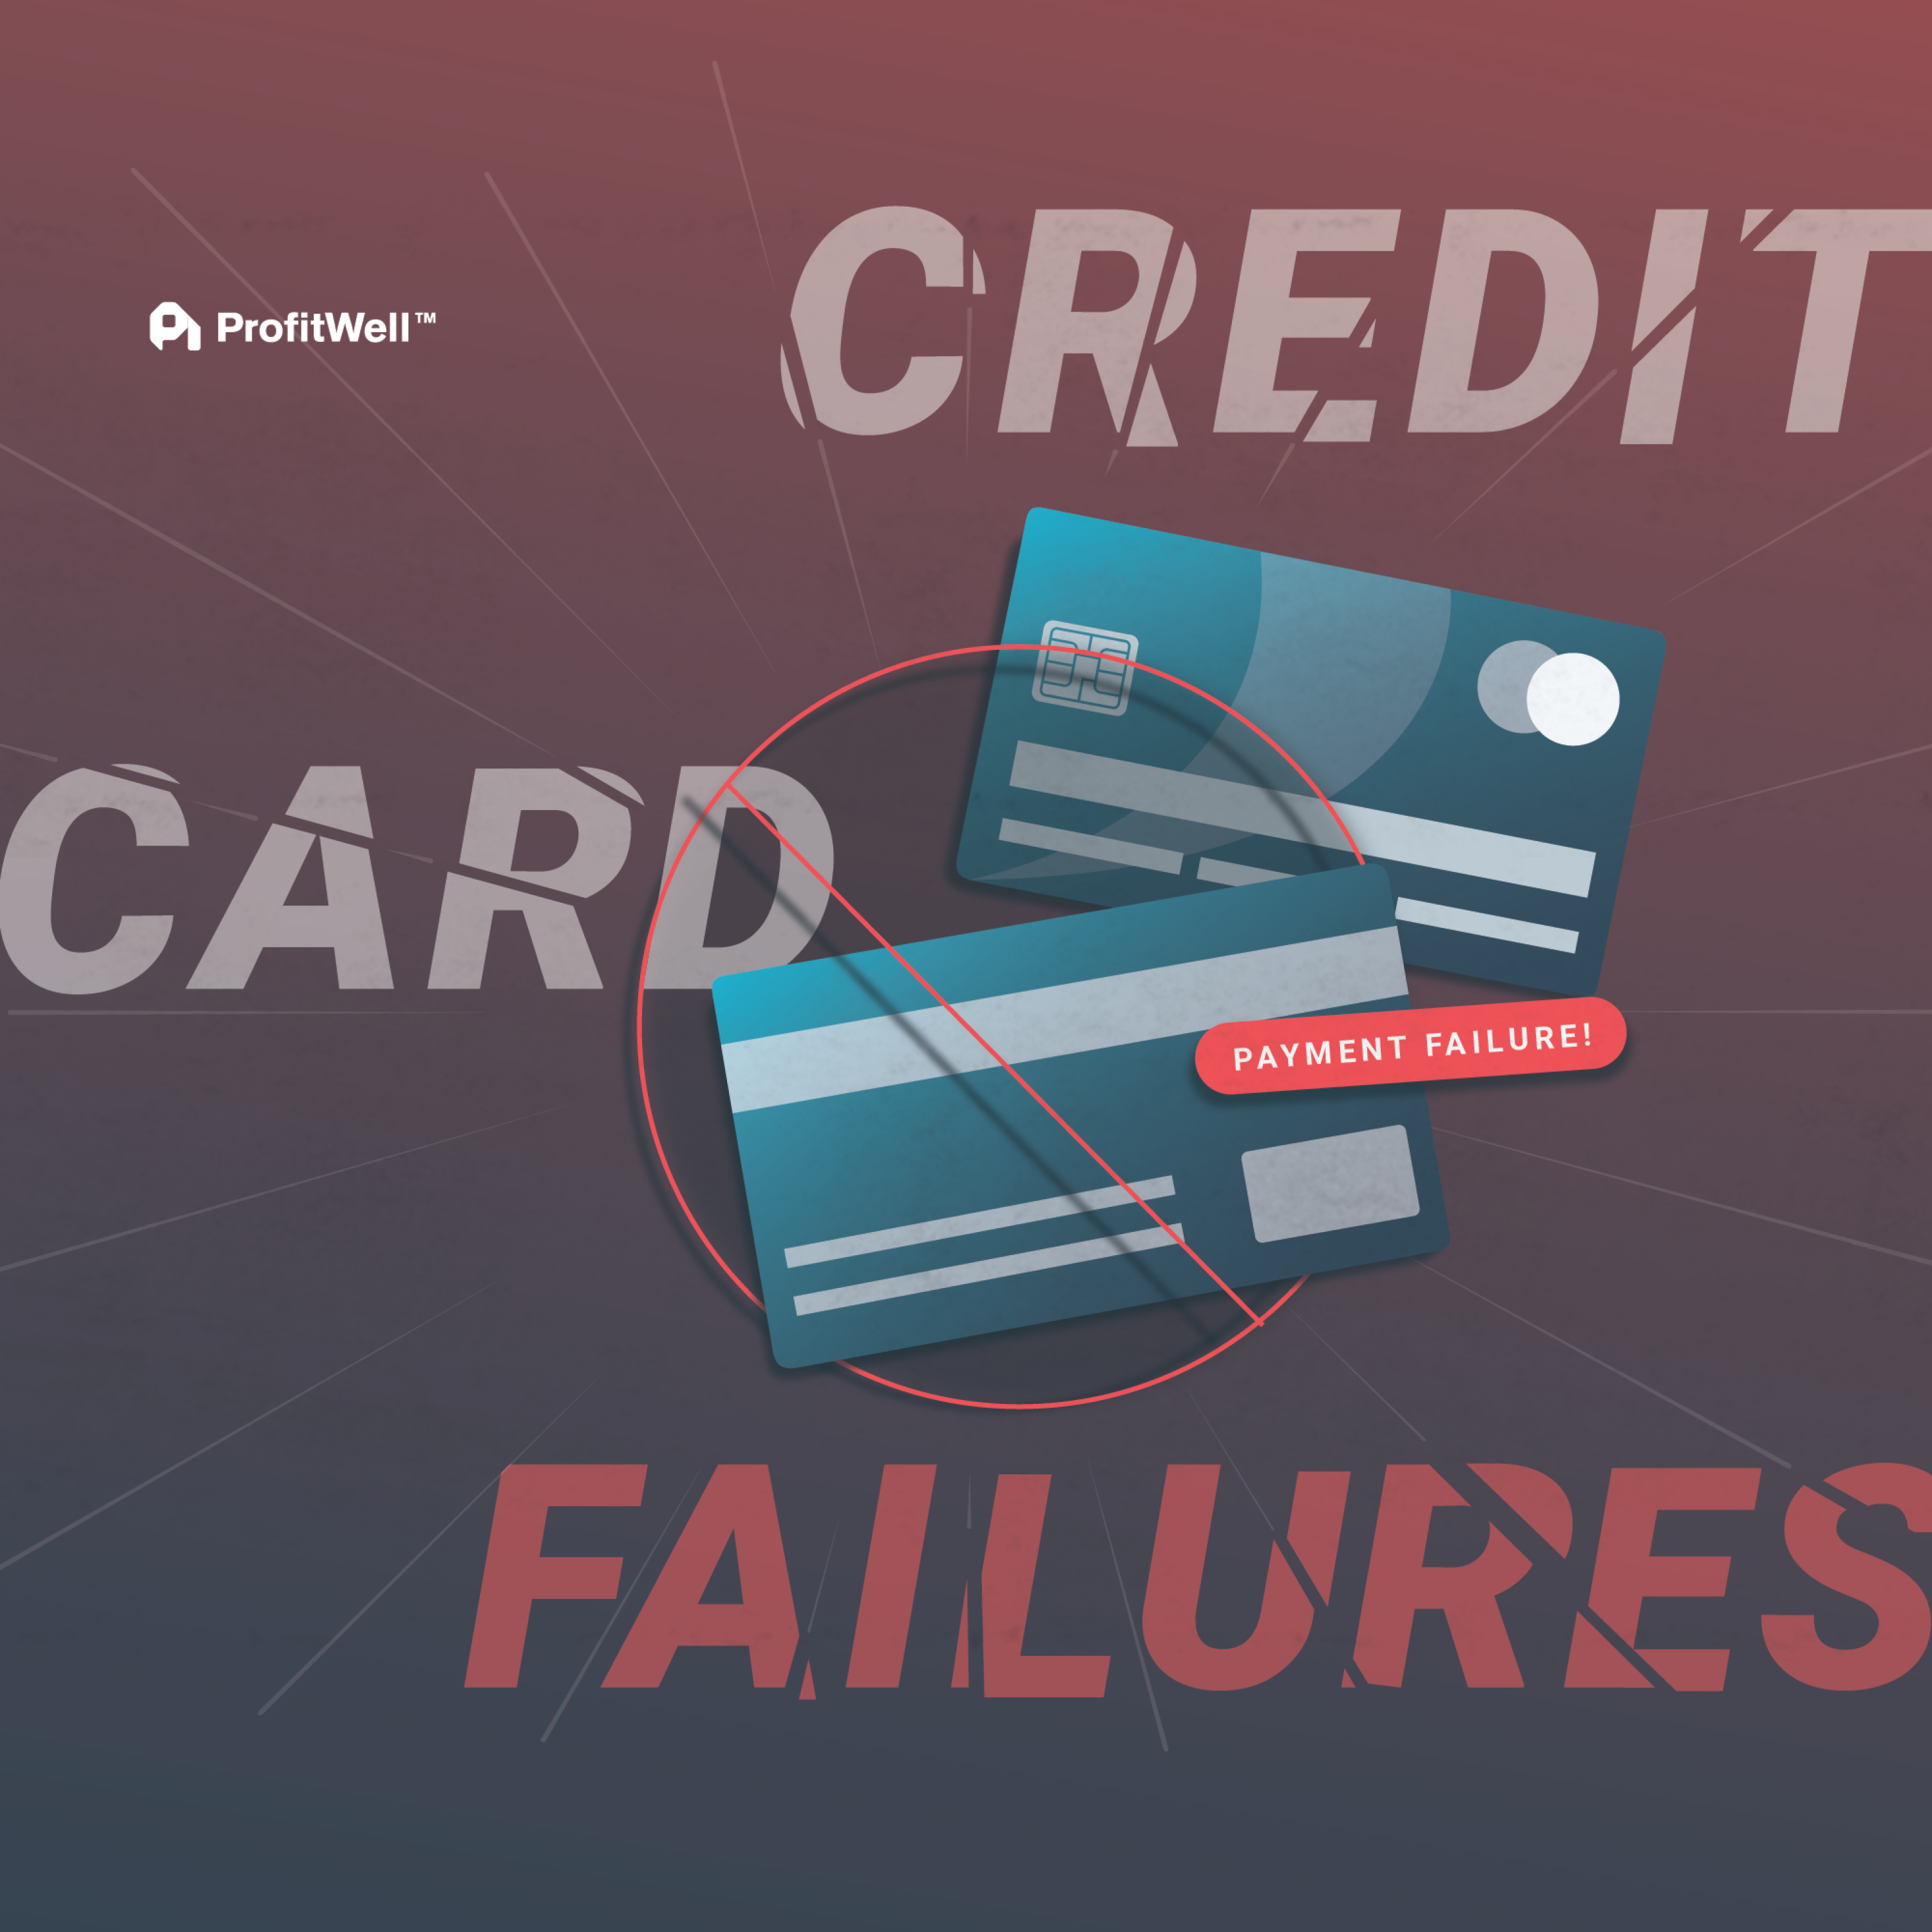 Credit Card Failures: Conclusion